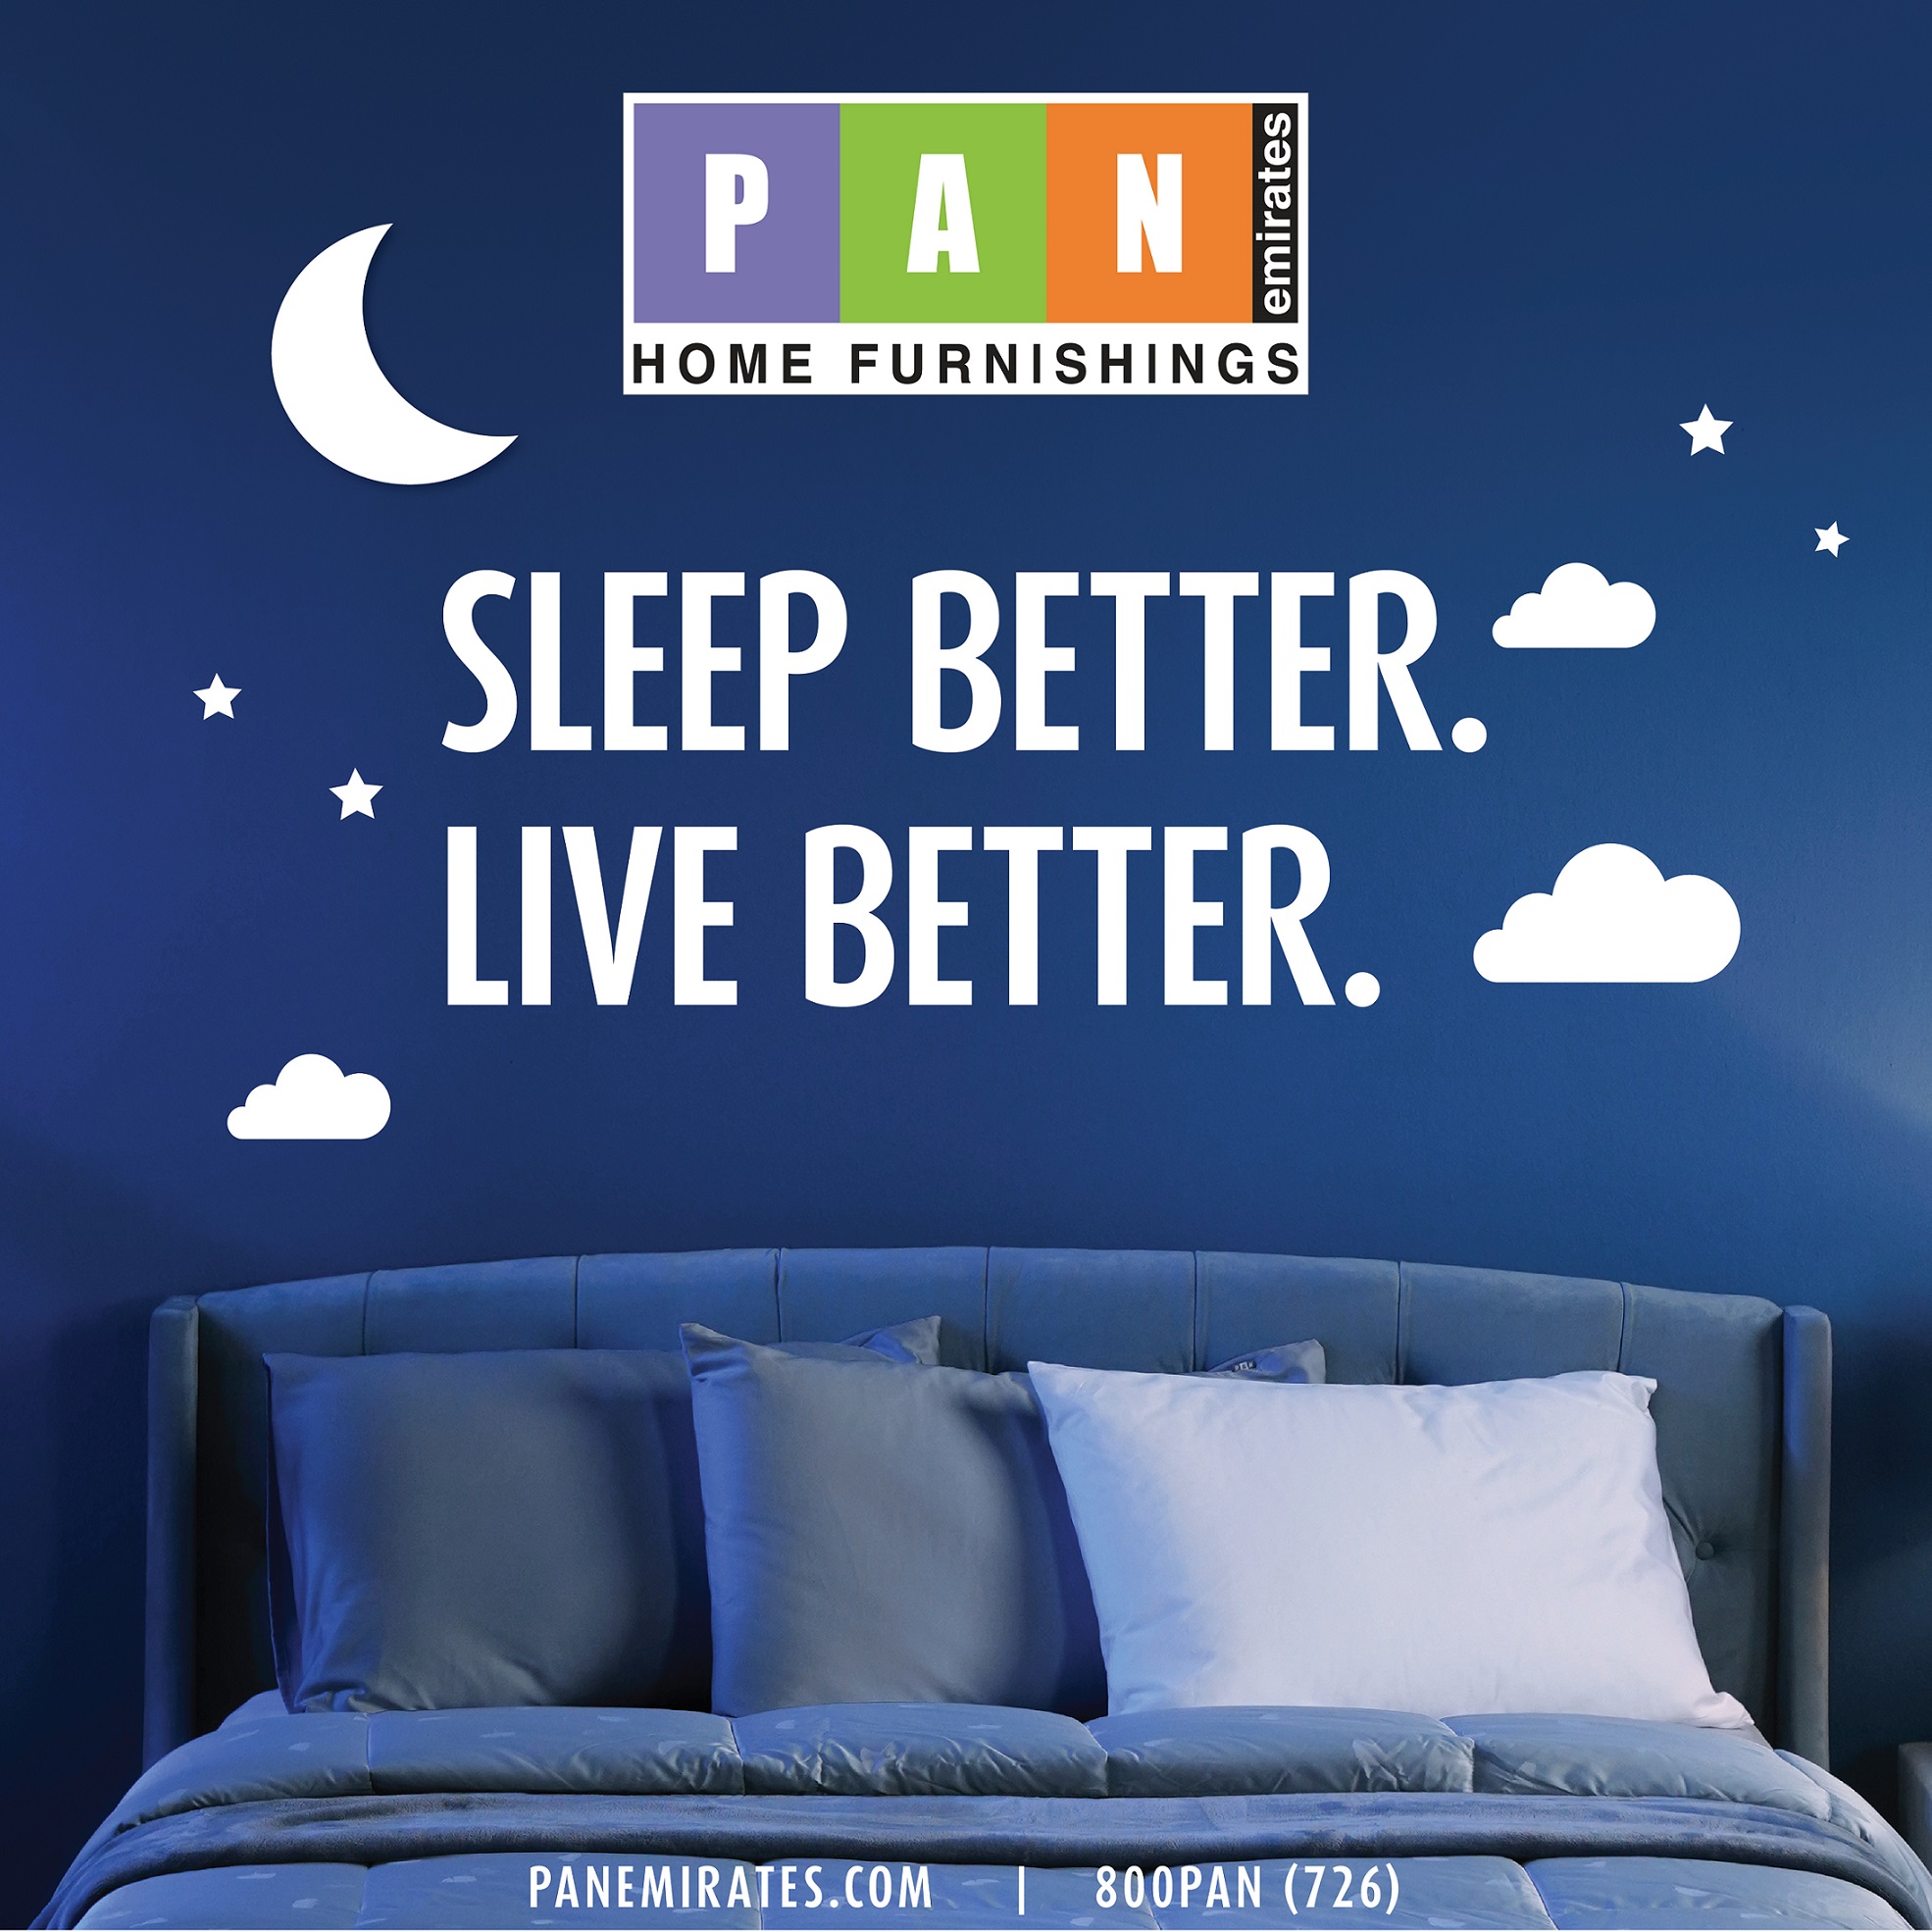 Pan Emirates Sleep Better, Live Better Campaign